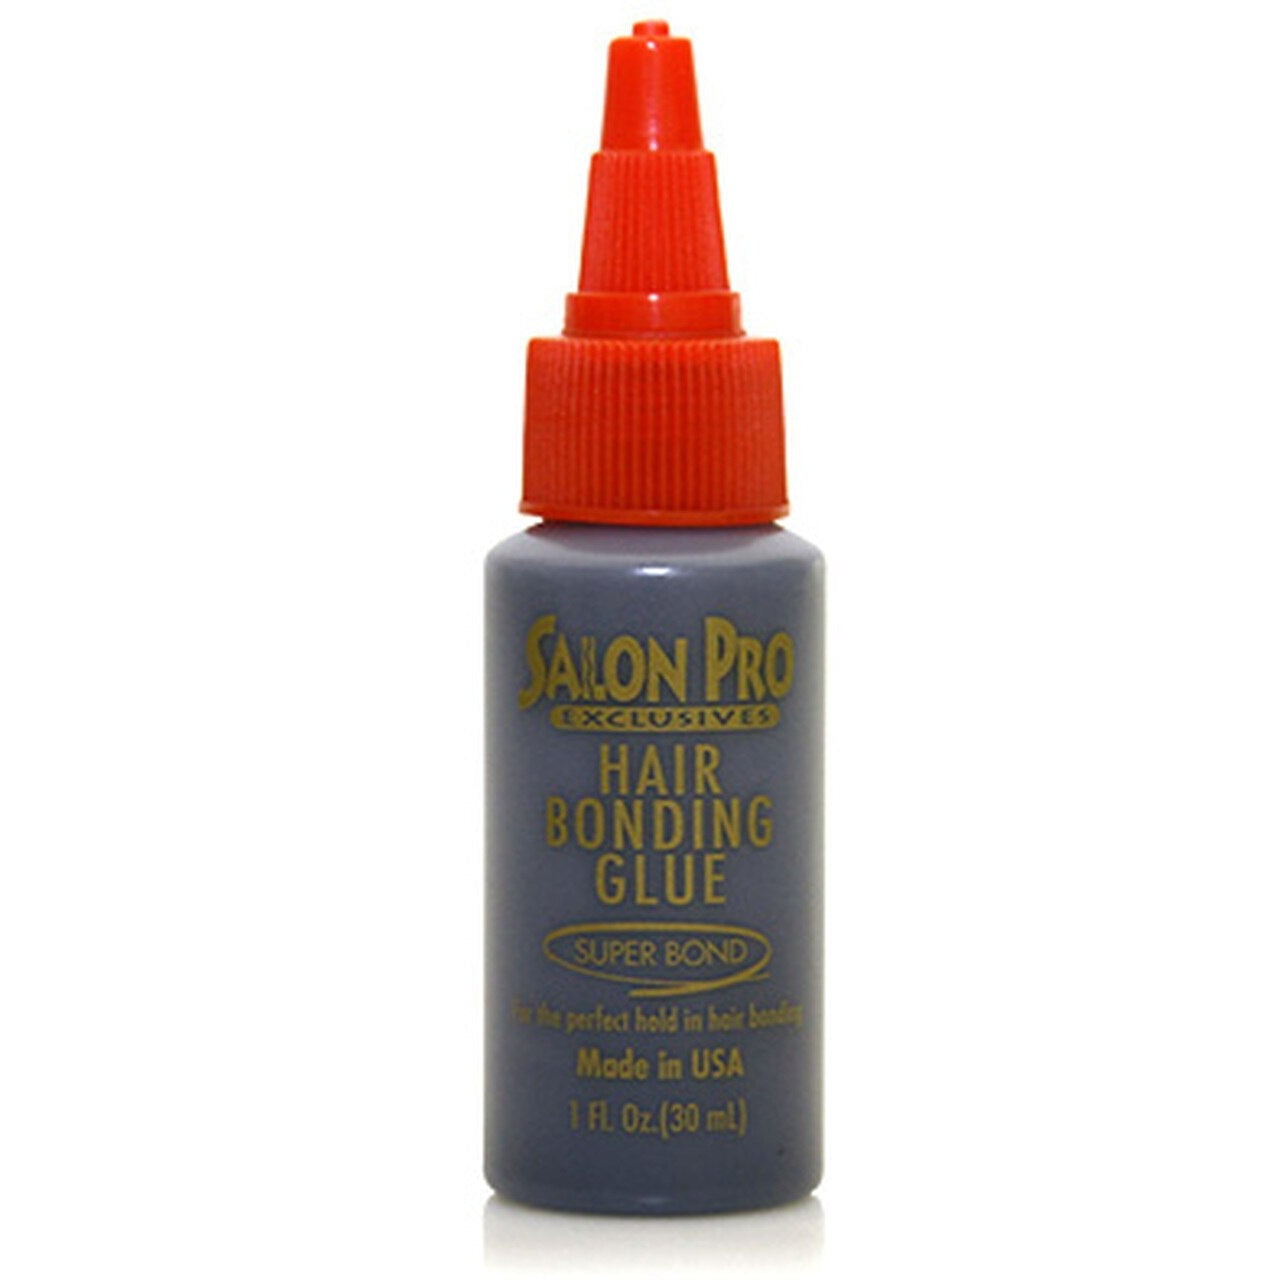 Salon Pro Exclusive Hair Bonding Glue - Black 30ml 1